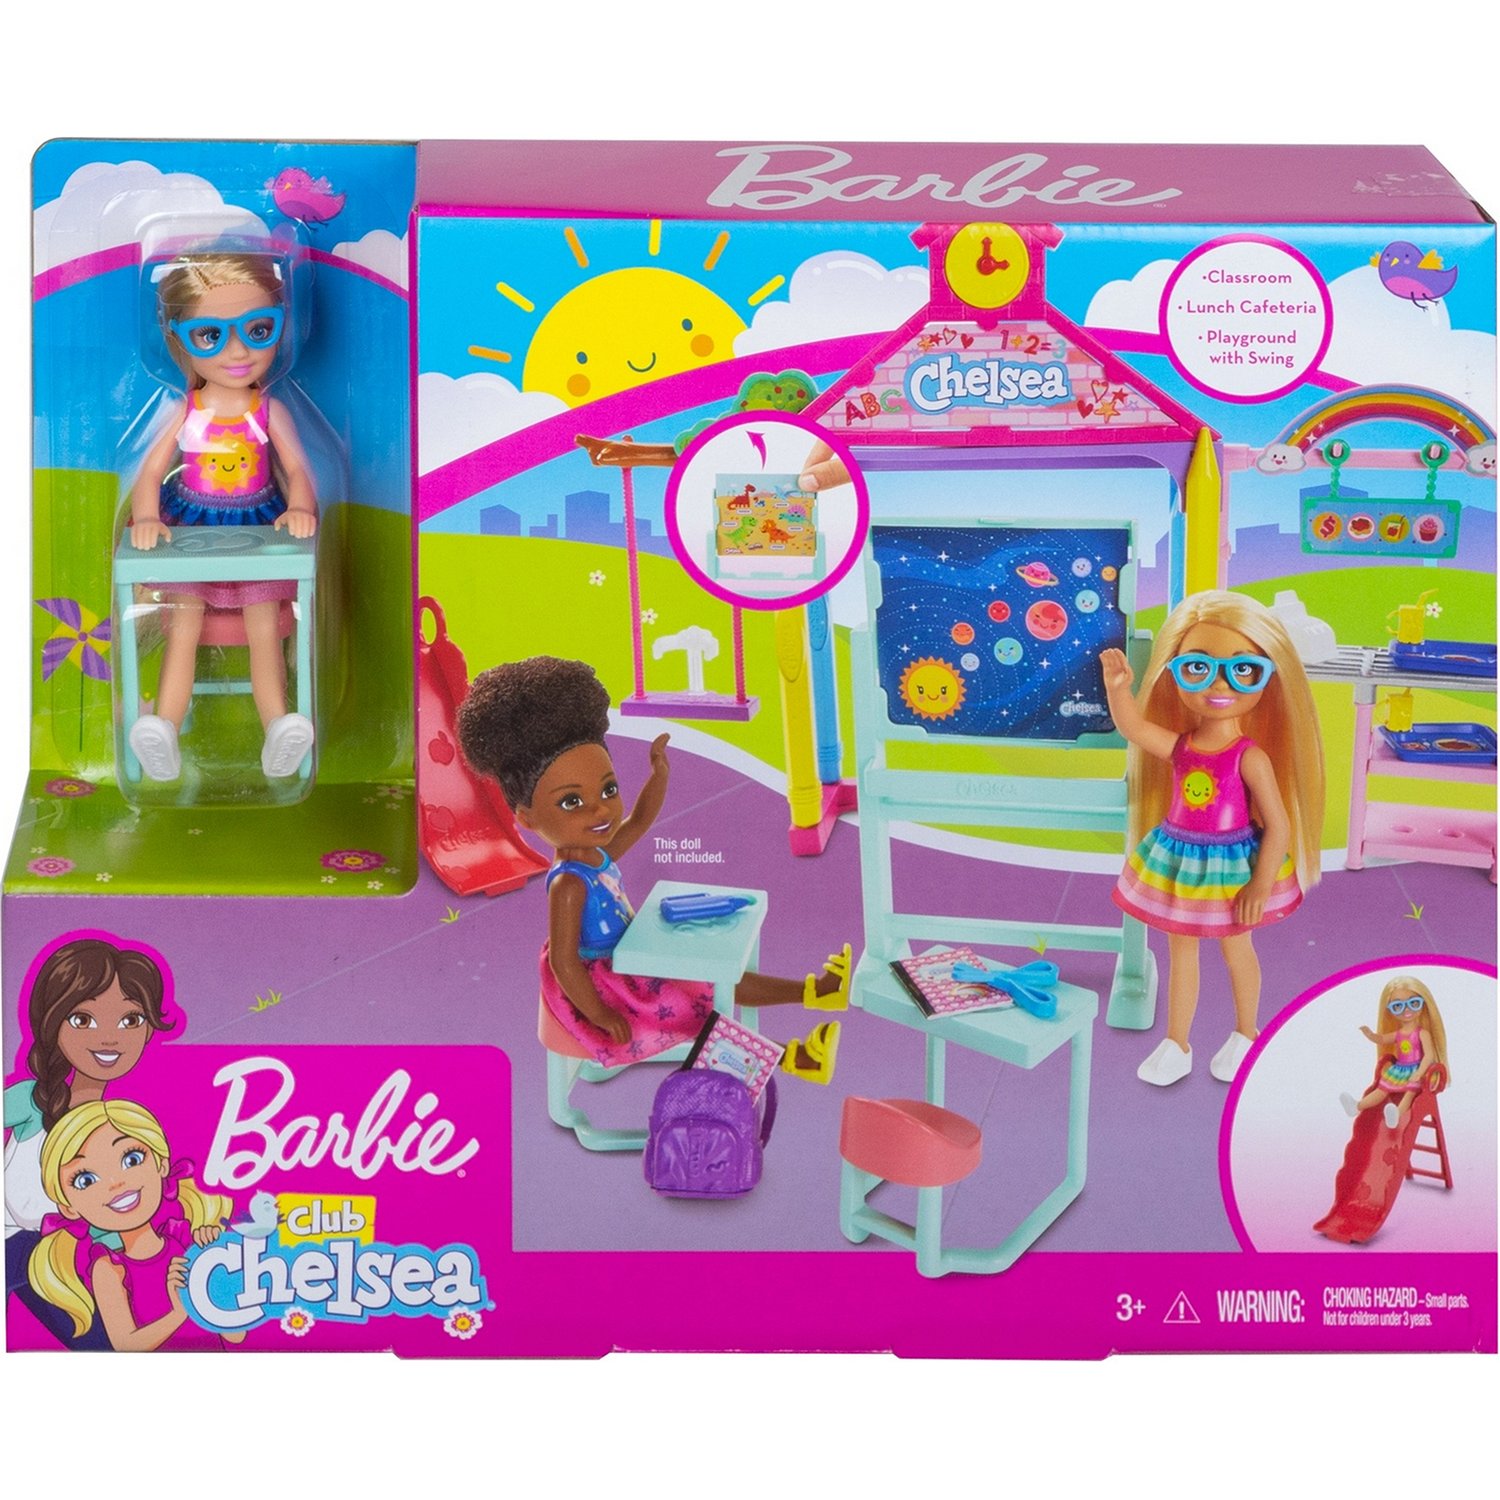 Игровой набор Barbie Club Chelsea Doll and School Челси-блондинка в школе, GHV80